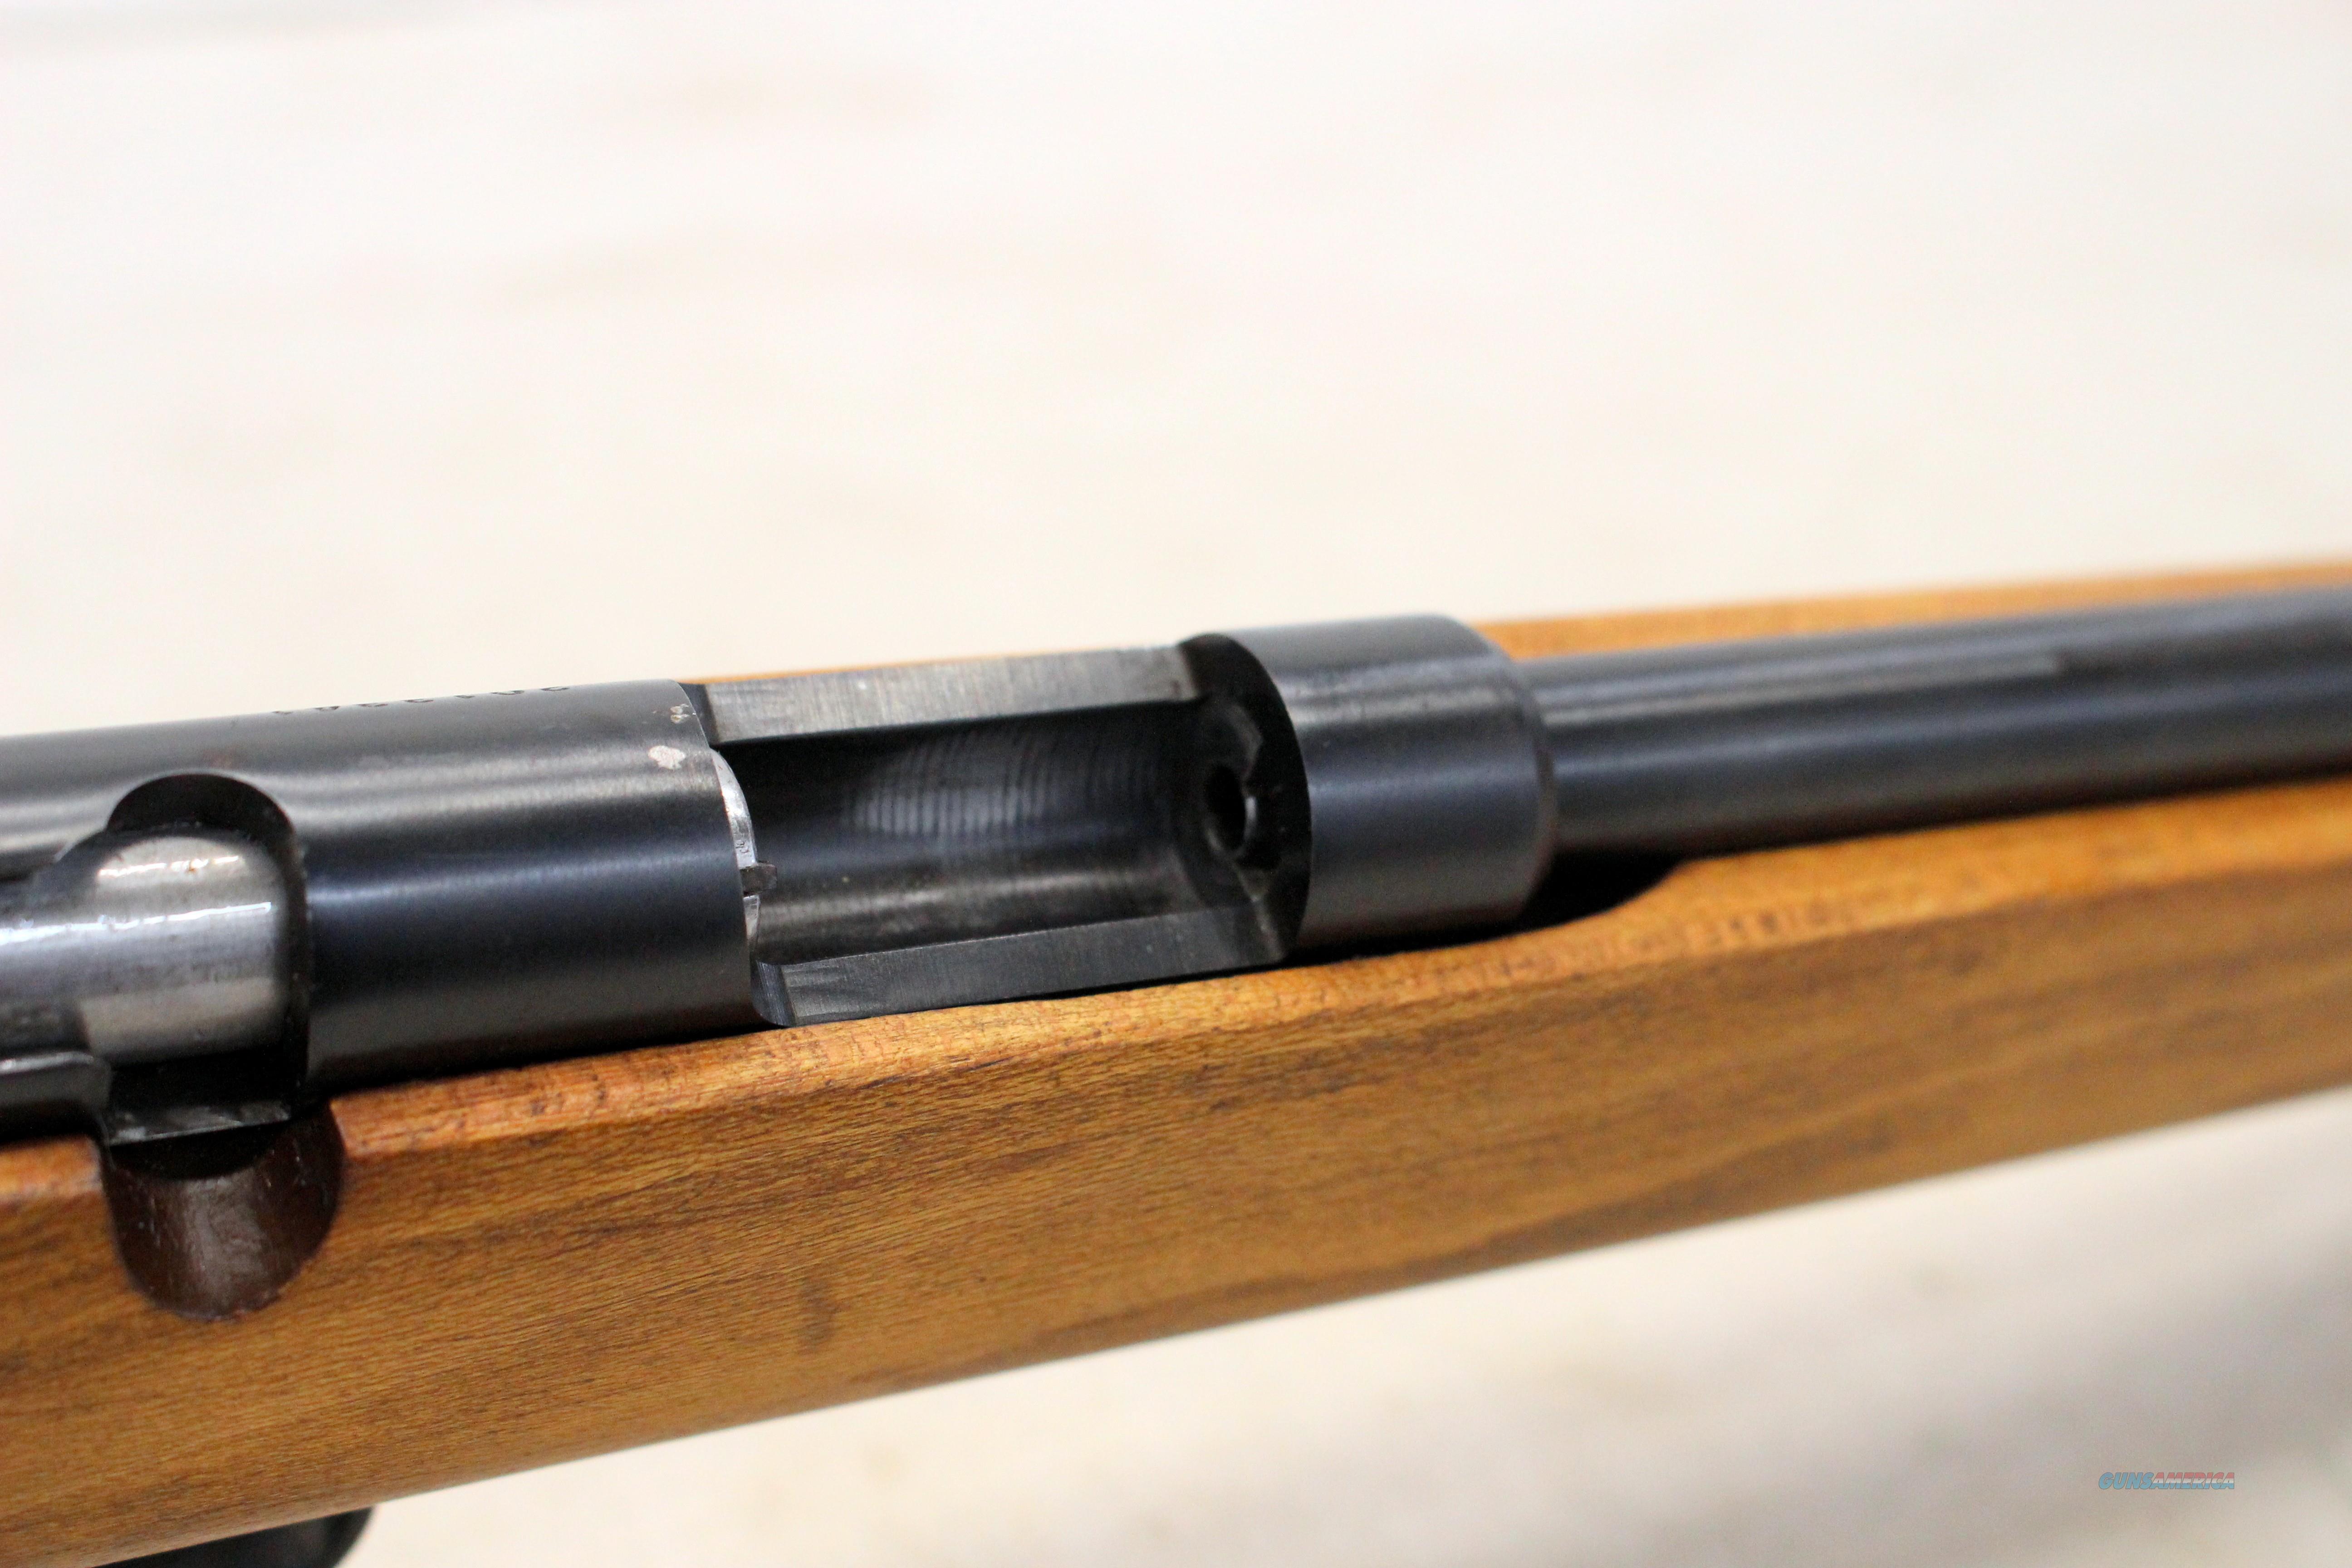 Remington Model 514 Bolt Action Sin... for sale at Gunsamerica.com ...